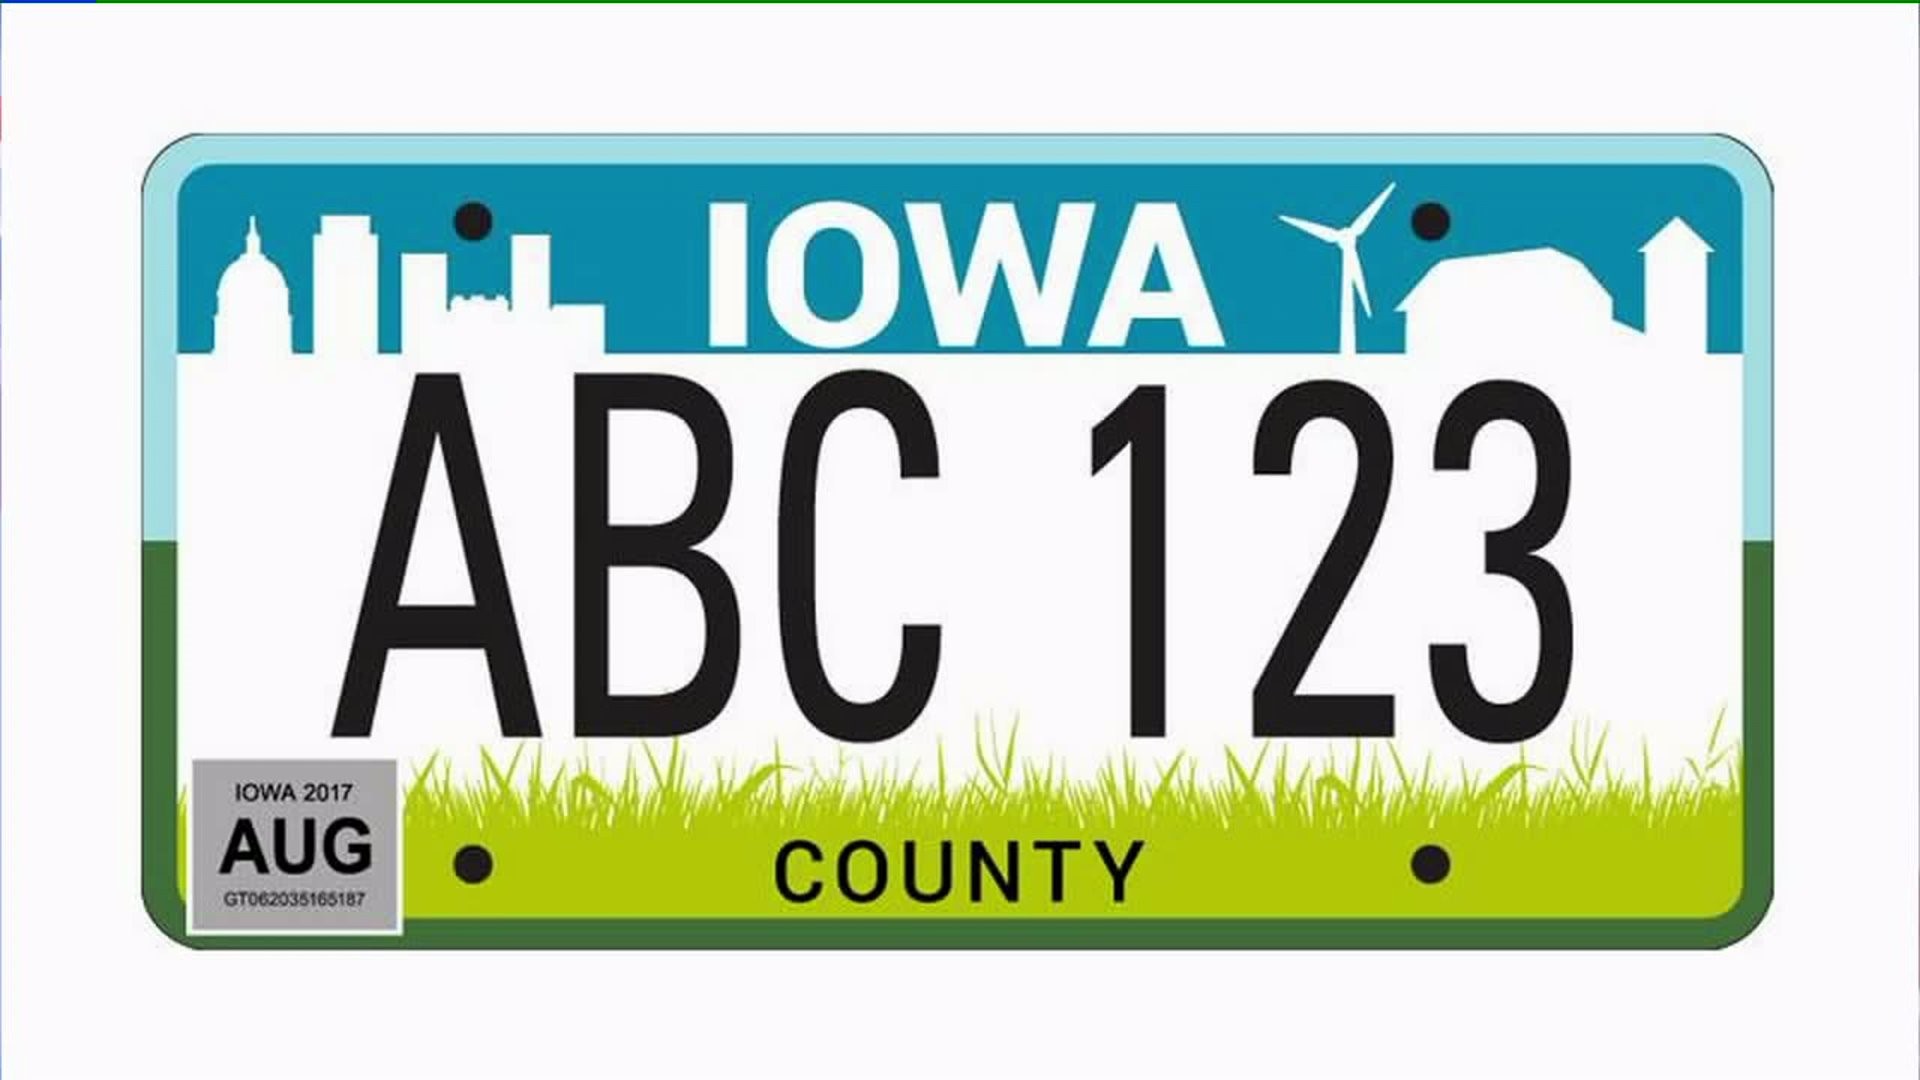 Winning Iowa license plate design